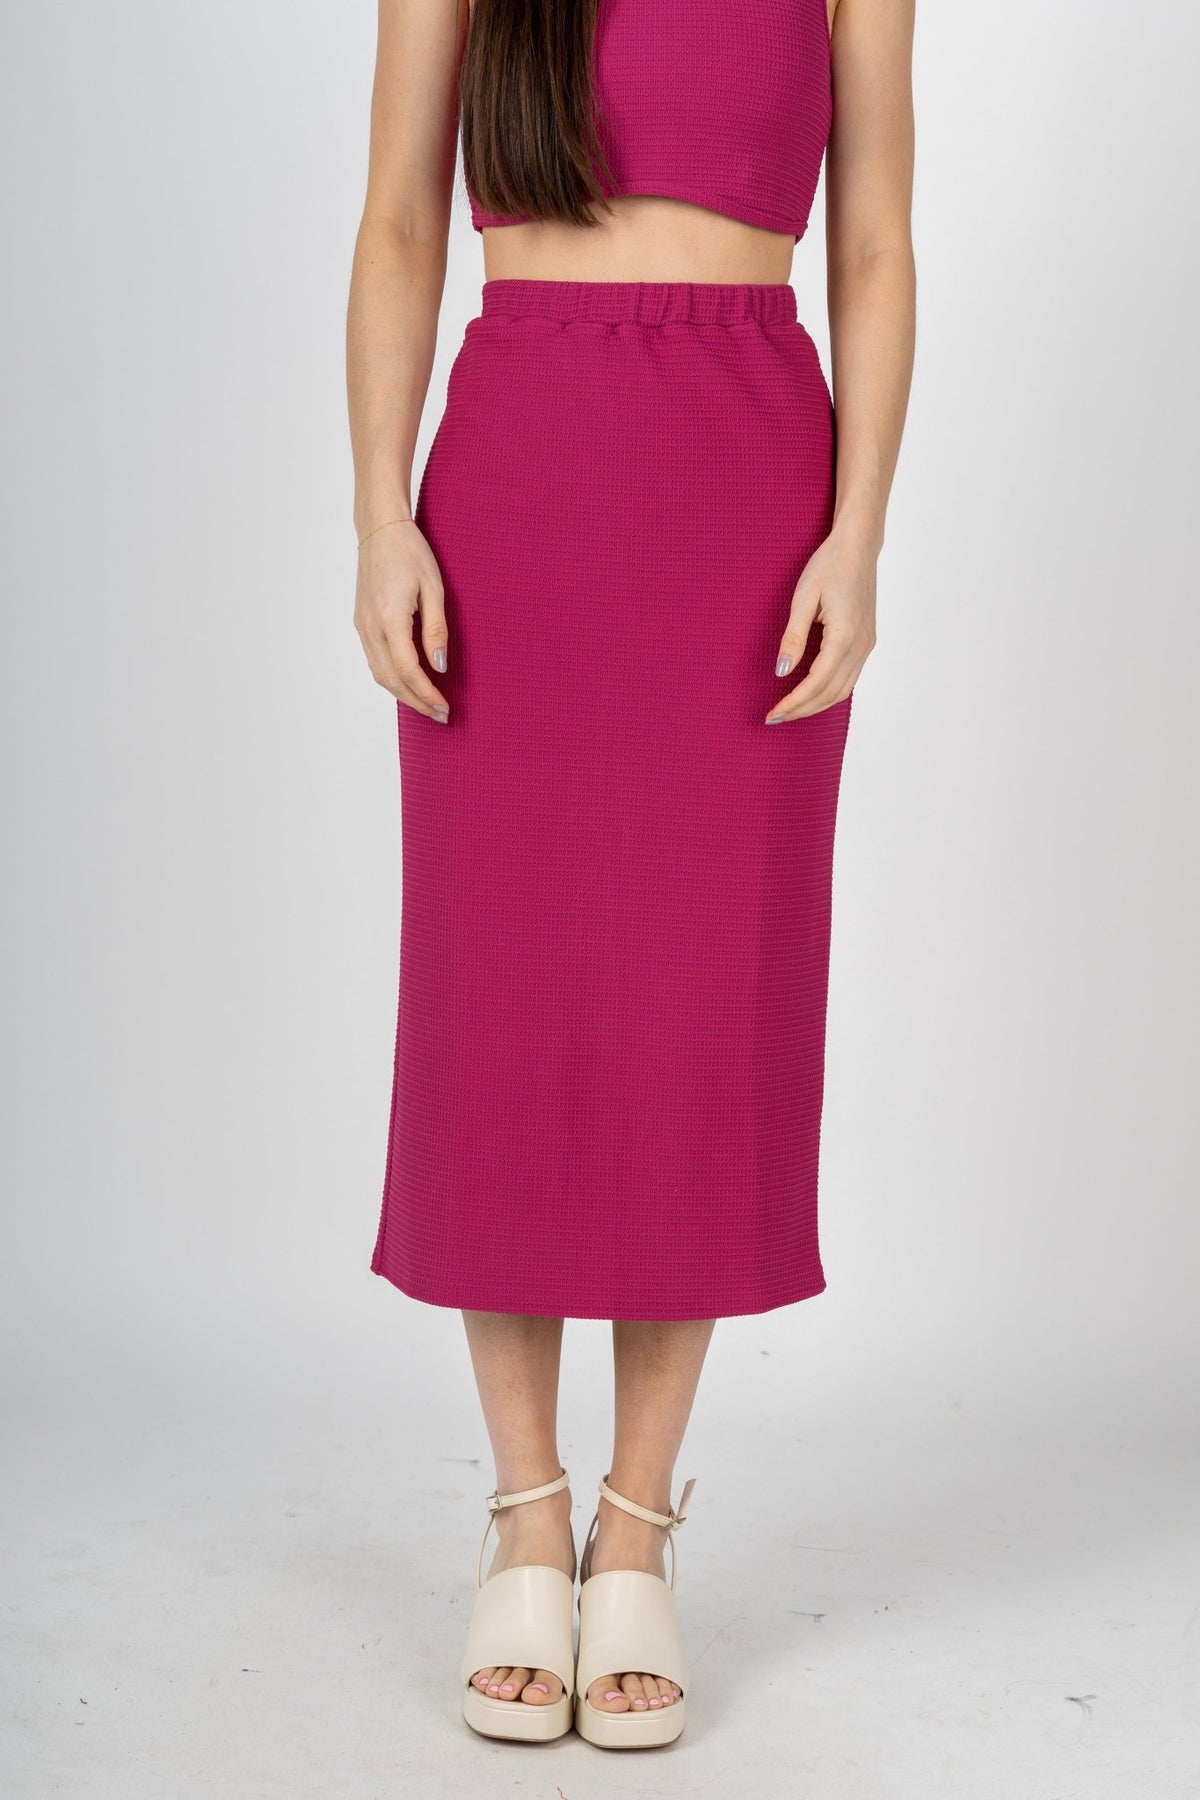 Knit midi skirt magenta | Lush Fashion Lounge: boutique fashion skirts, affordable boutique skirts, cute affordable skirts